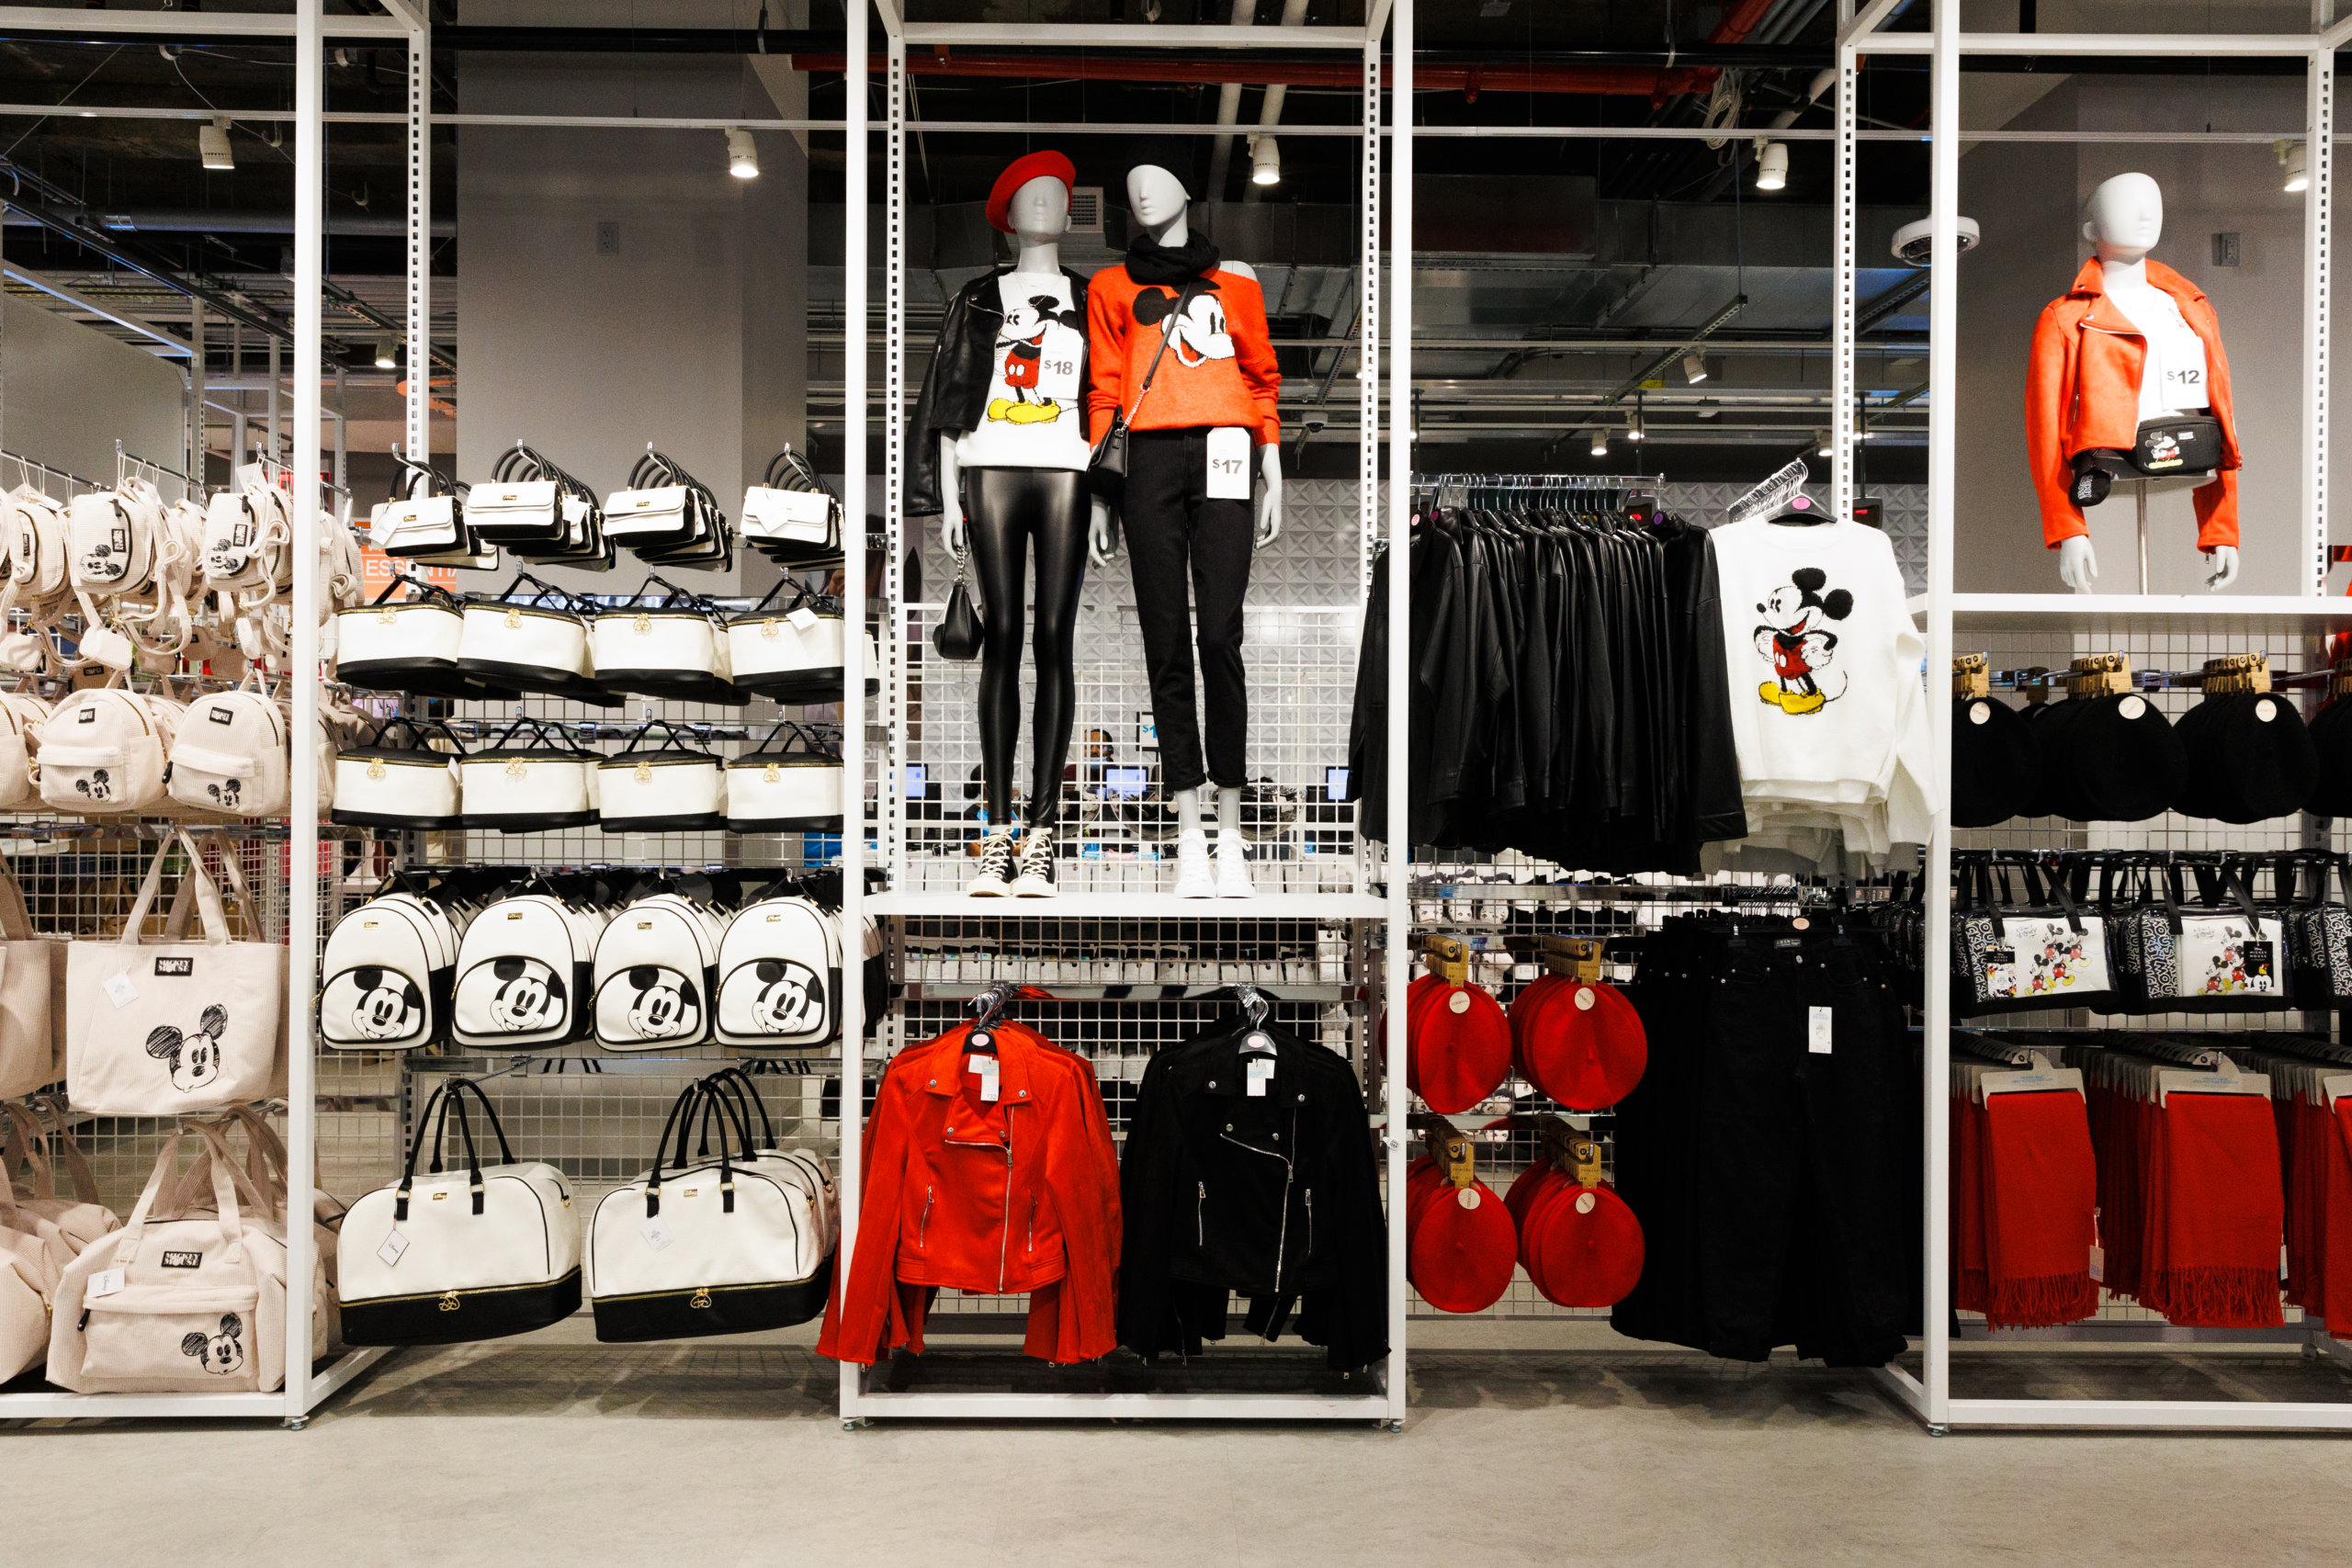 International clothing retailer Primark set to open new store in